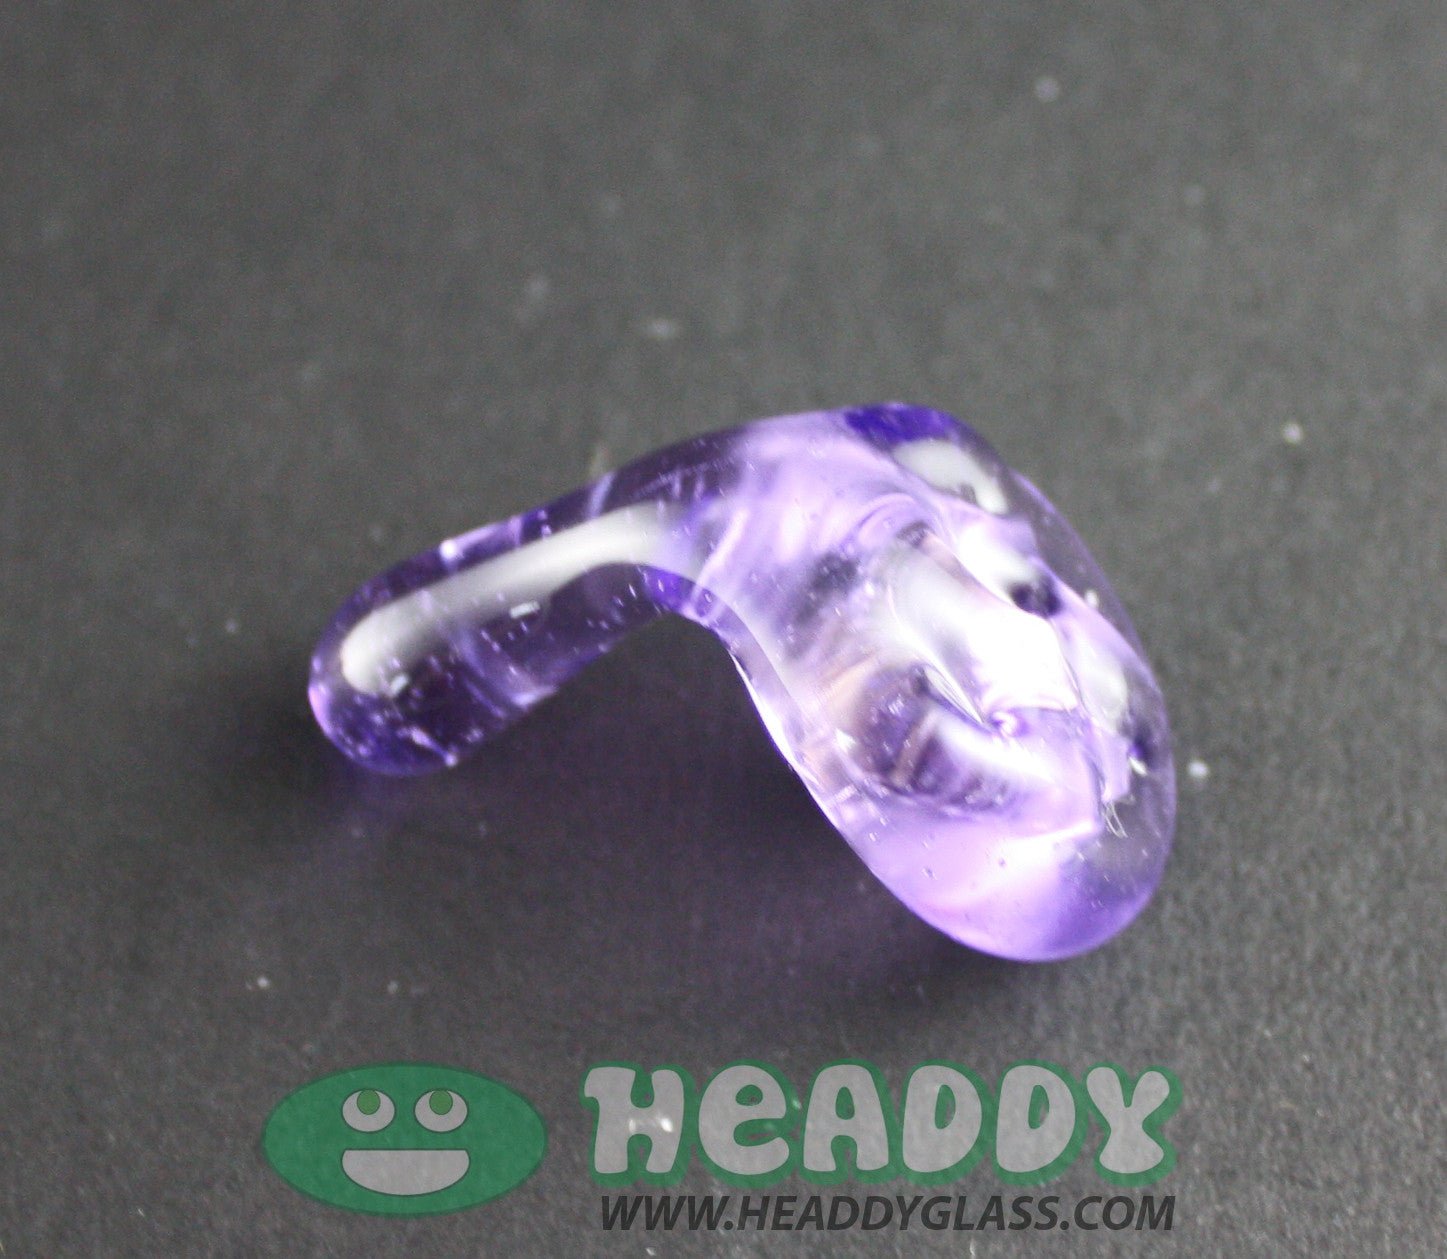 Adami - Drippy Pin #3 - Headdy Glass - HG